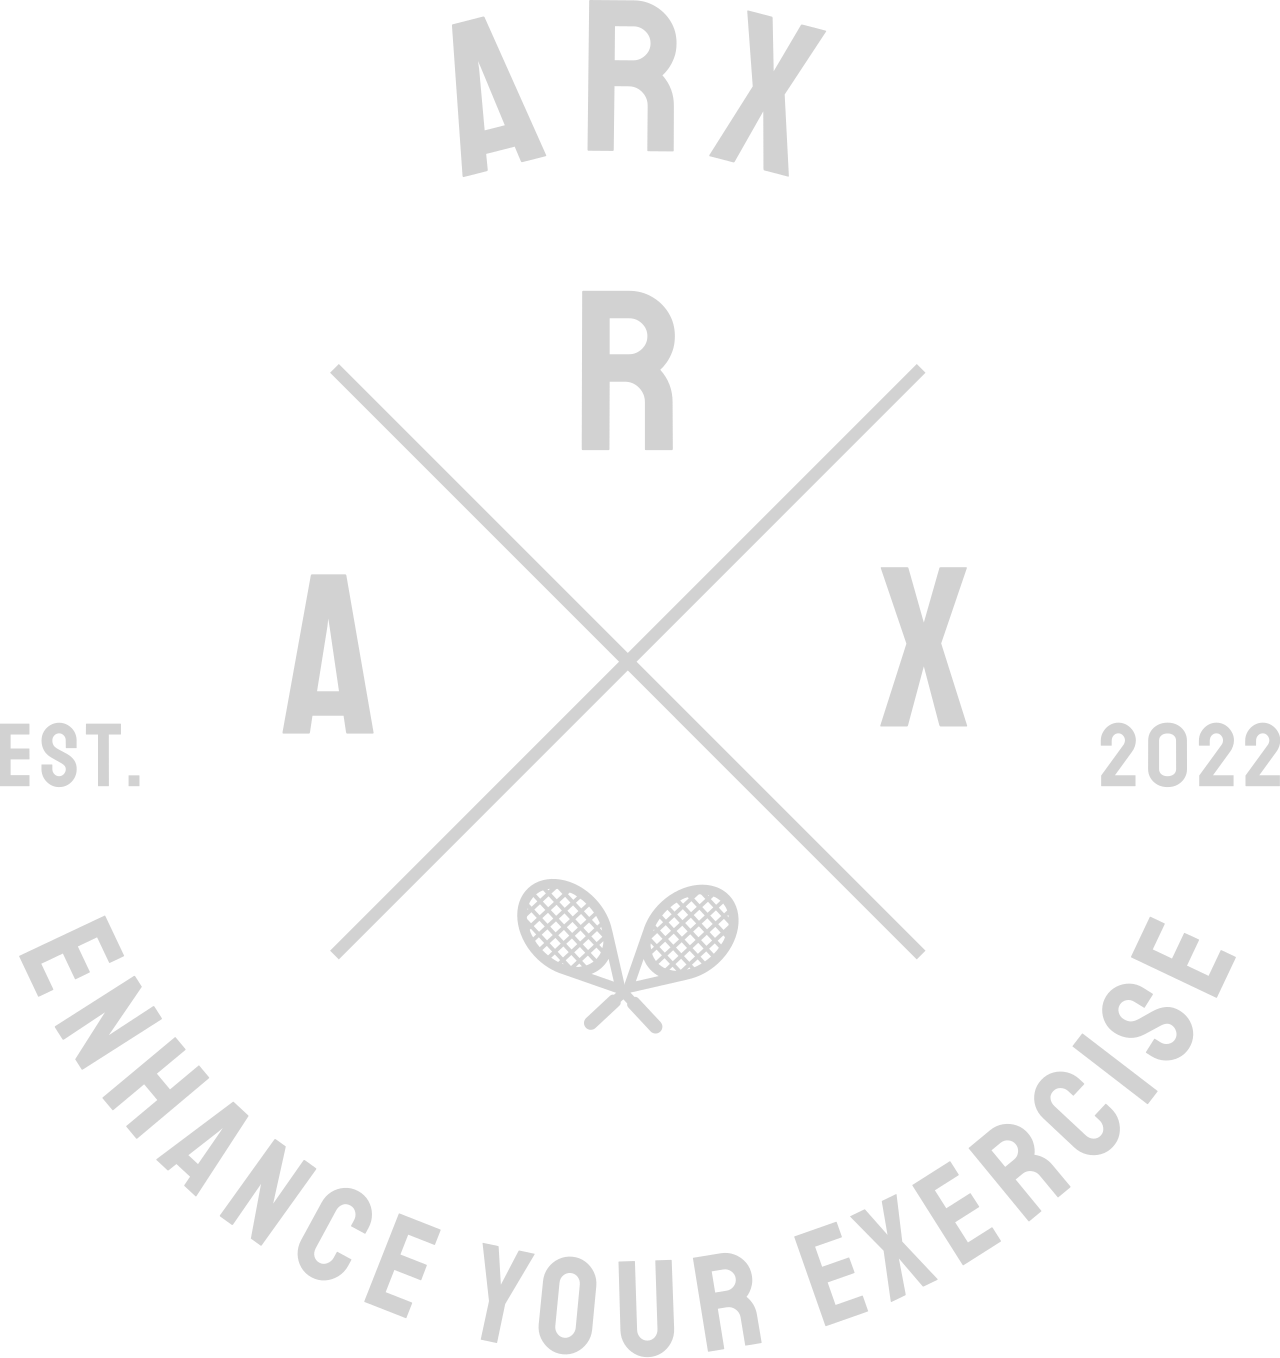 ARX's logo